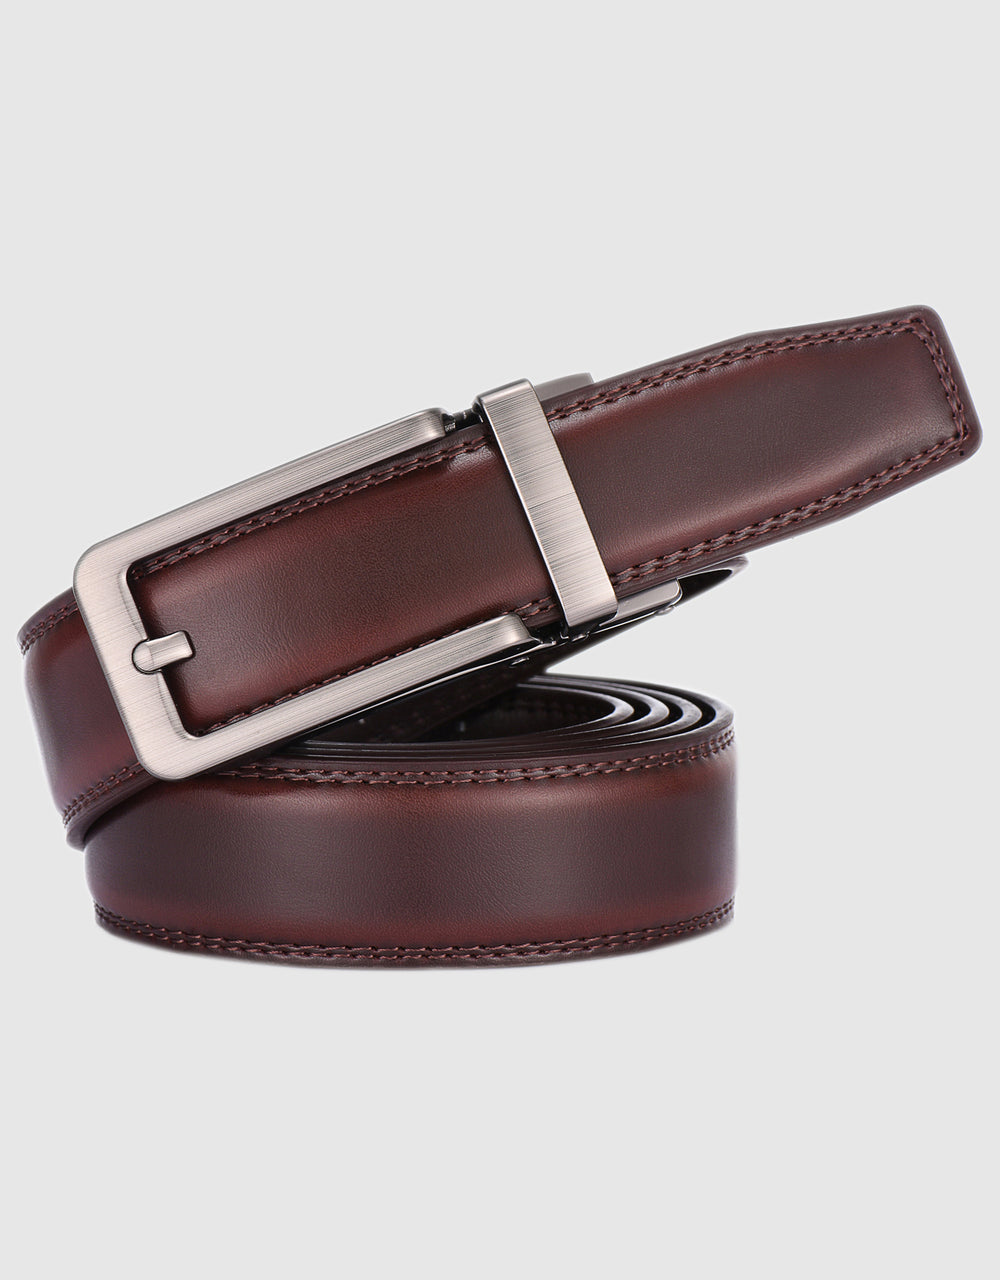 Gallery Seven Leather Ratchet Belt For Men - Adjustable Click Belt - C– Mio  Marino